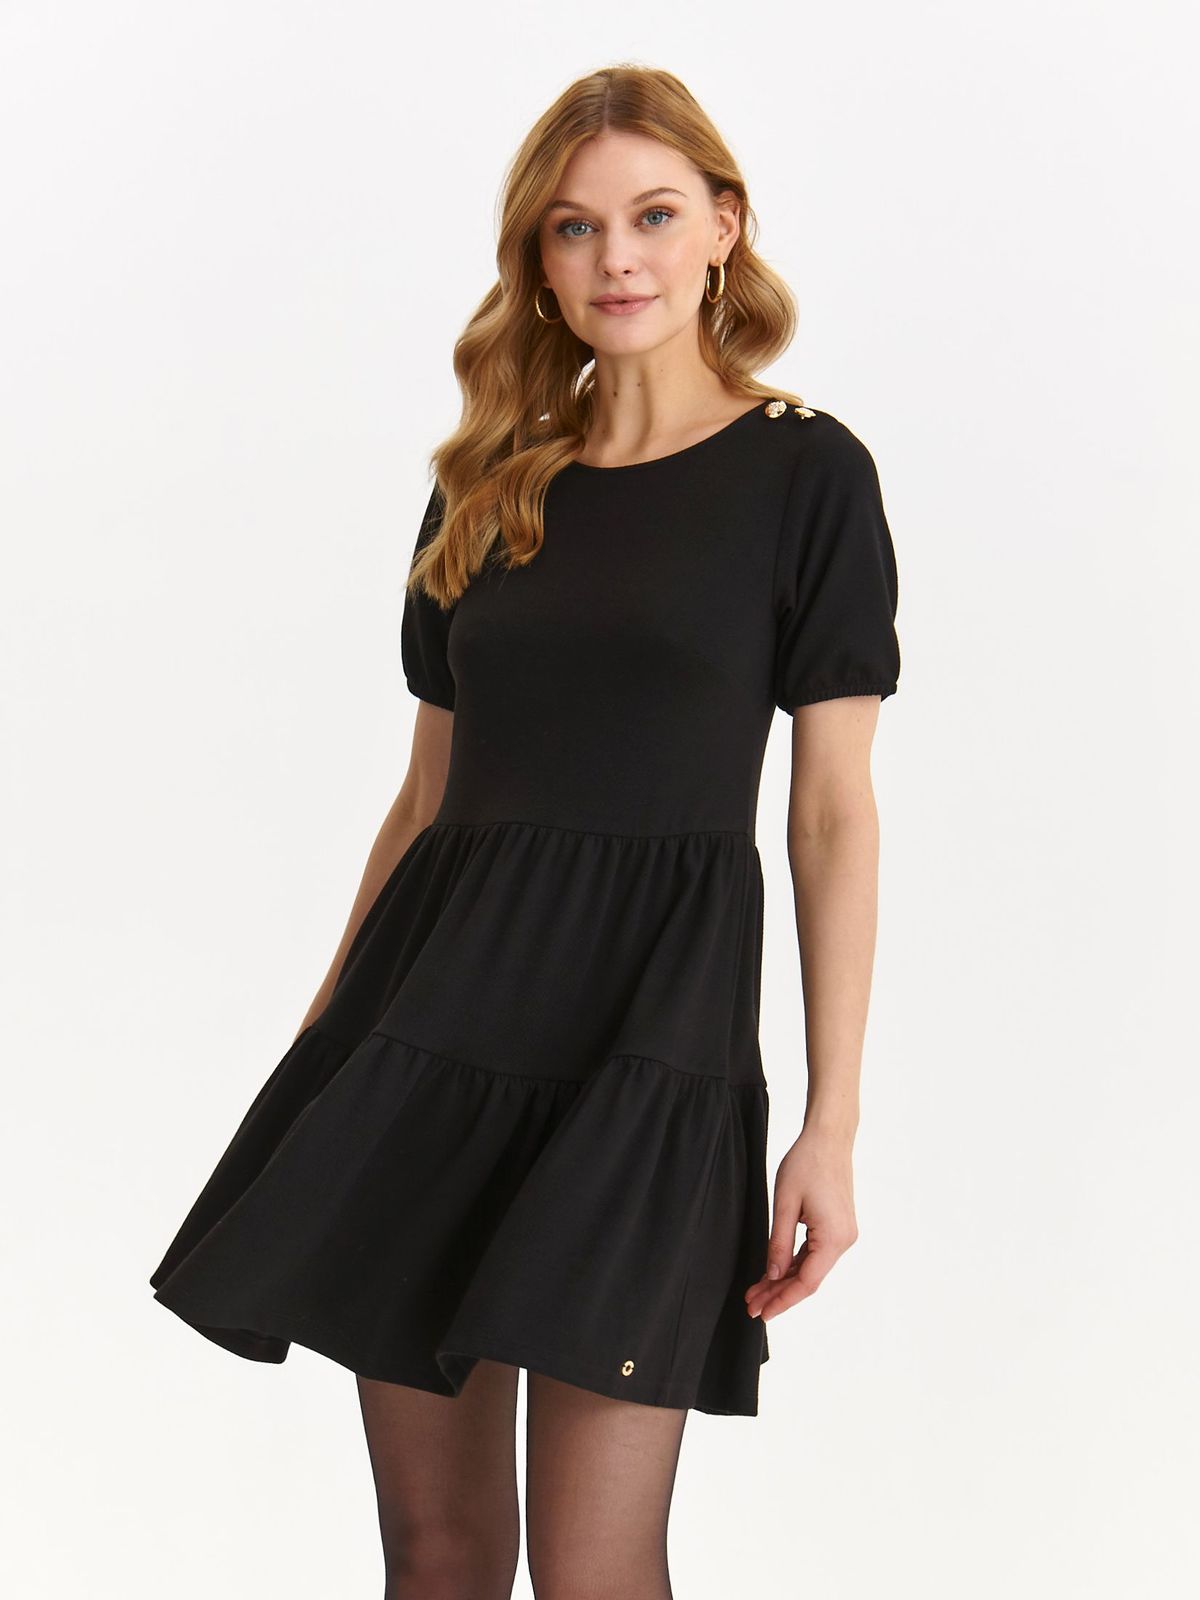 Black dress thin fabric short cut cloche short sleeves